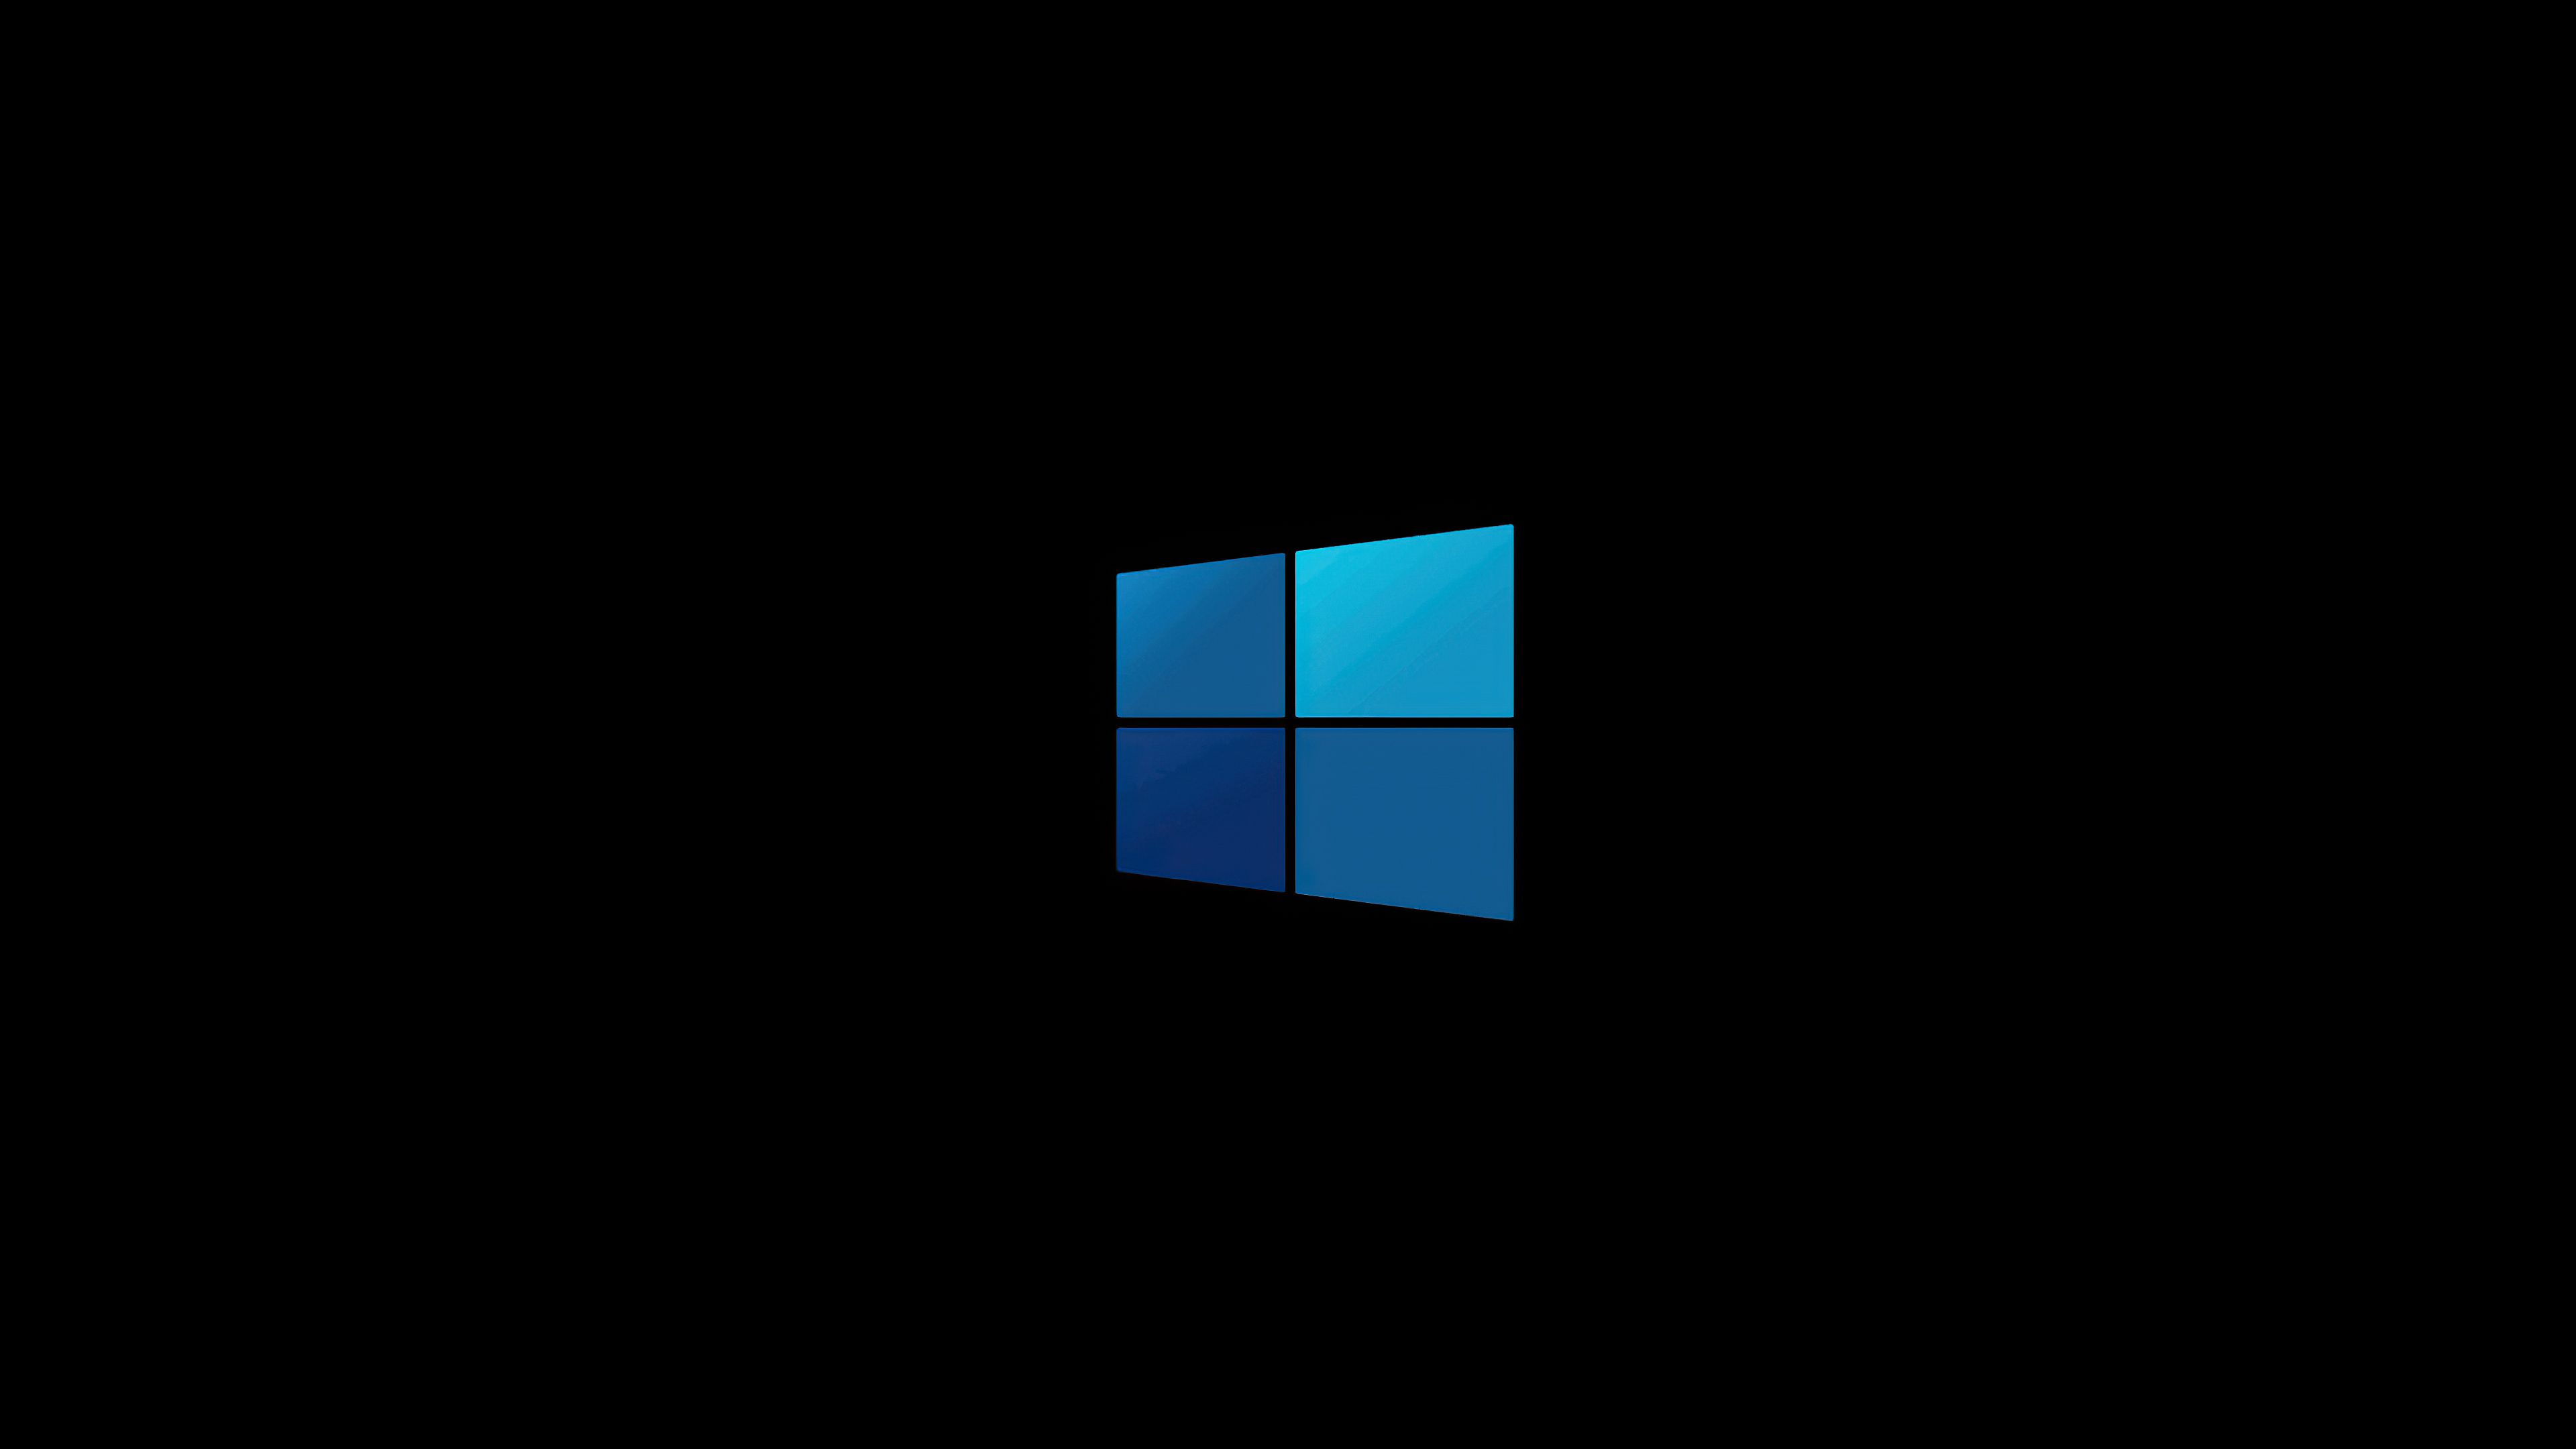 Windows 10 Minimal Logo 4k Wallpaper, HD